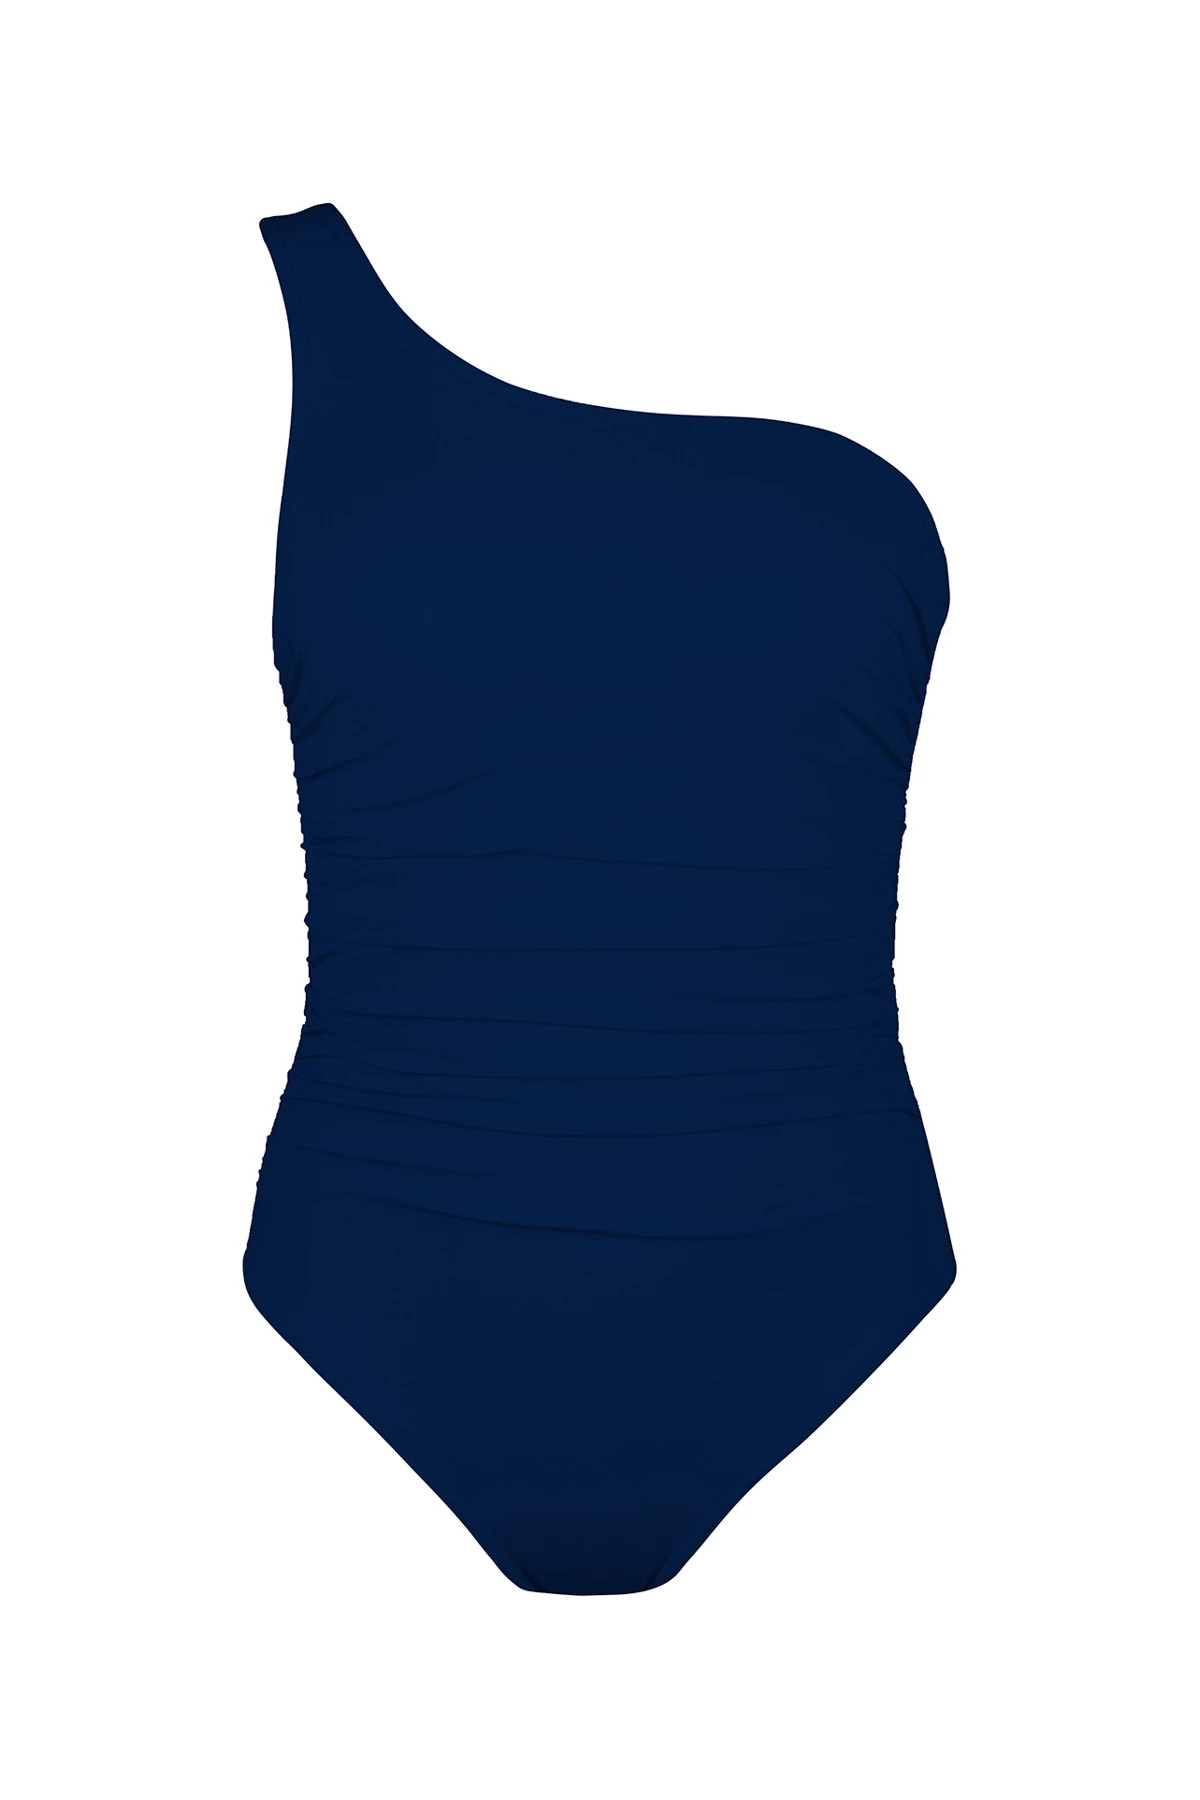 NAVY Basics Asymmetrical One Piece Swimsuit image number 1